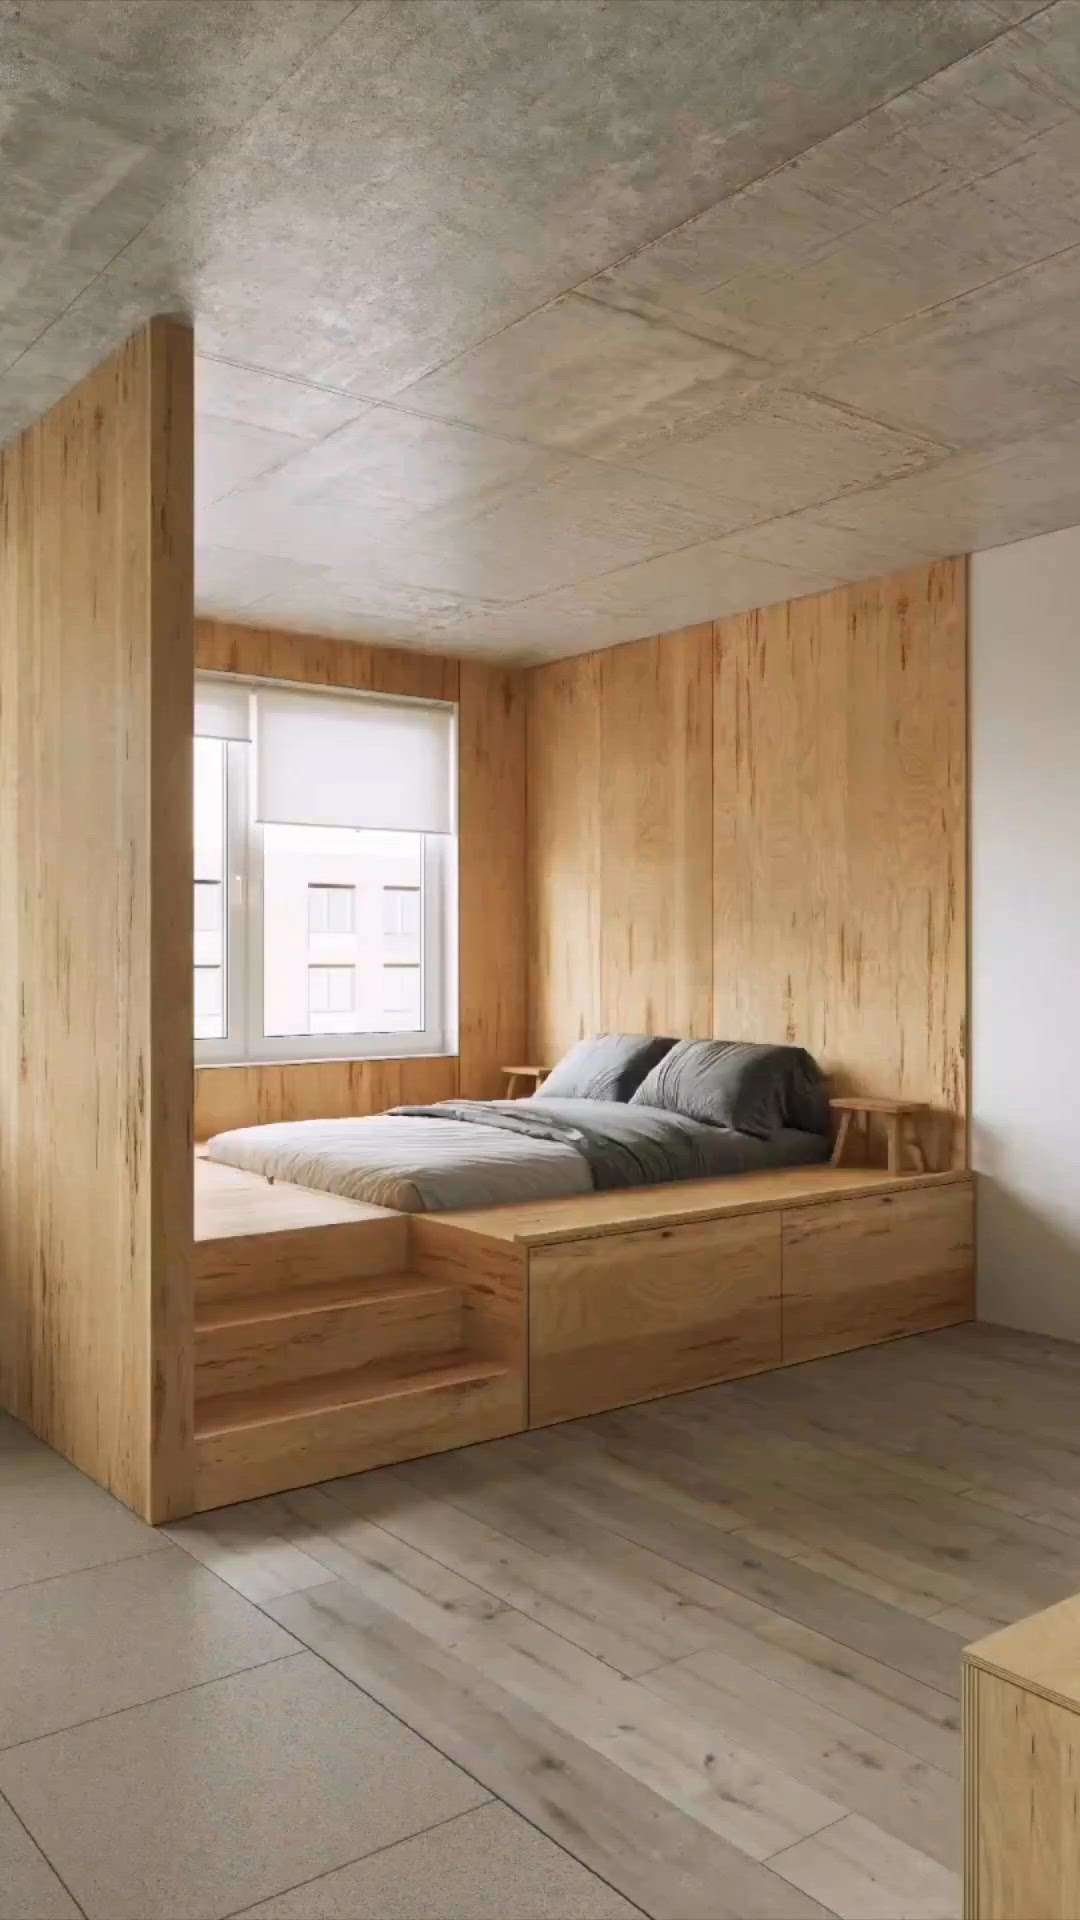 #InteriorDesigner  #SmallHouse  #SmallRoom  #Architectural&Interior  #modular  #modularroom  #sajid